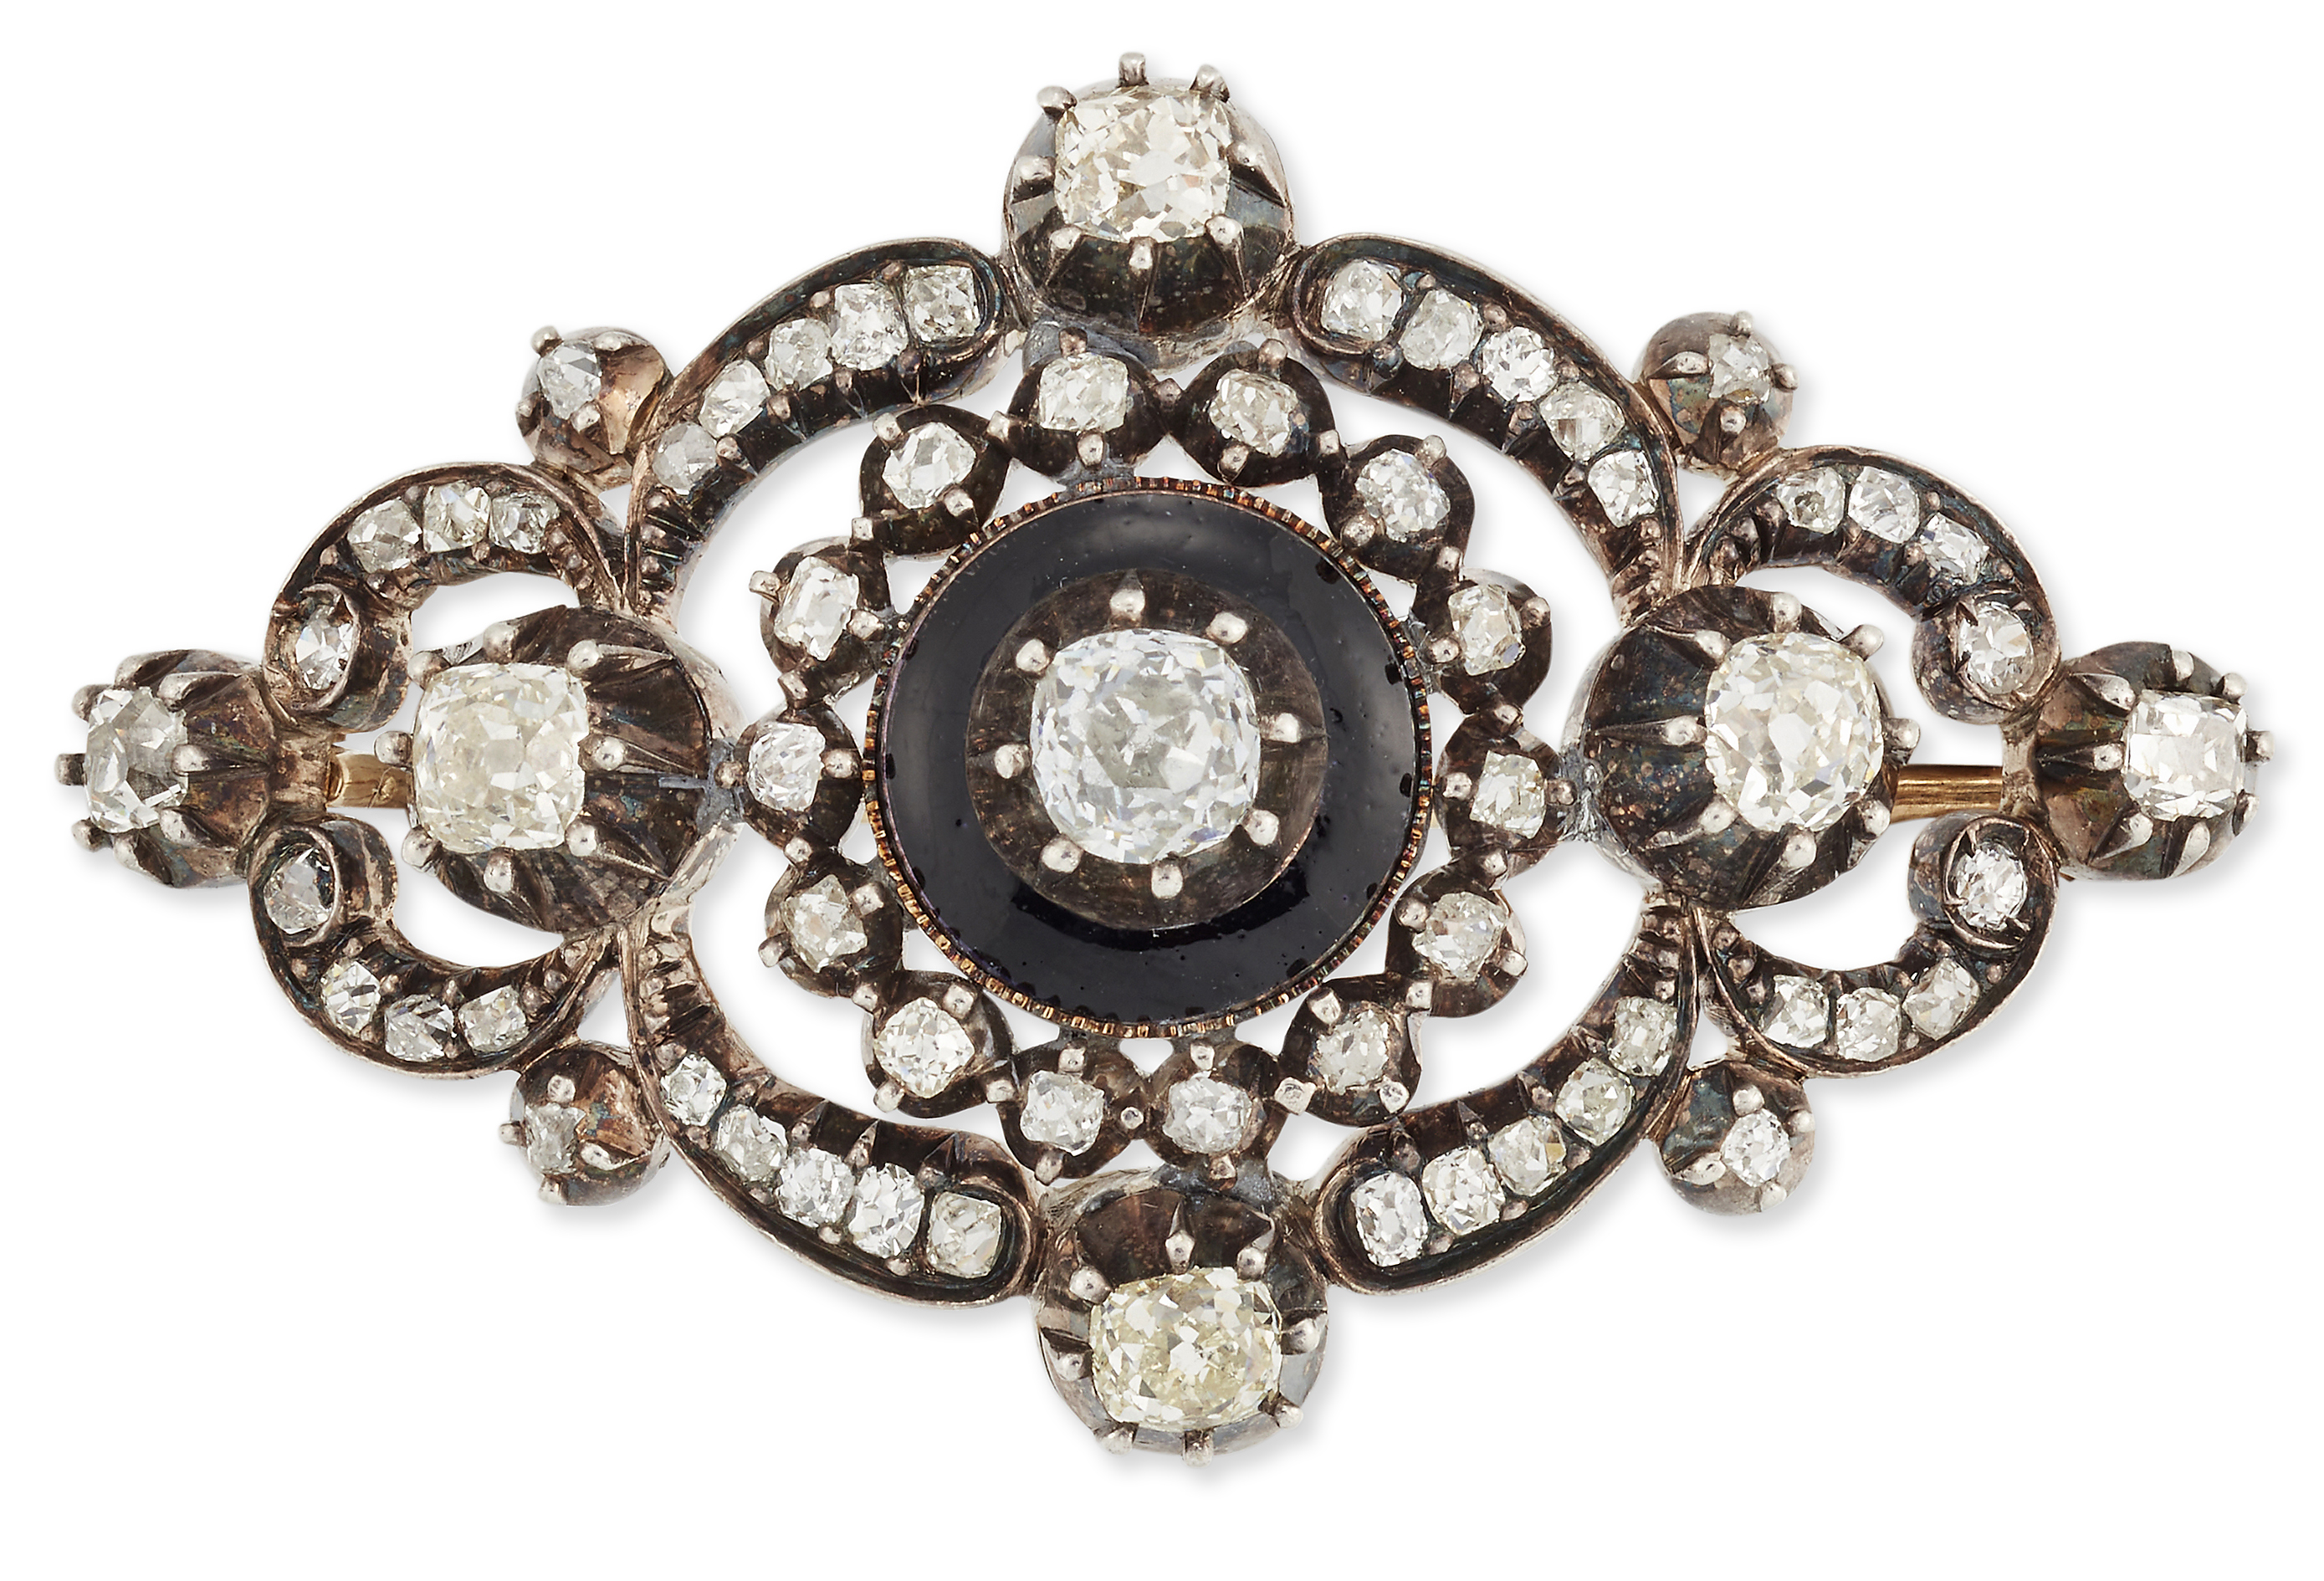 A 19th century diamond and enamel brooch,